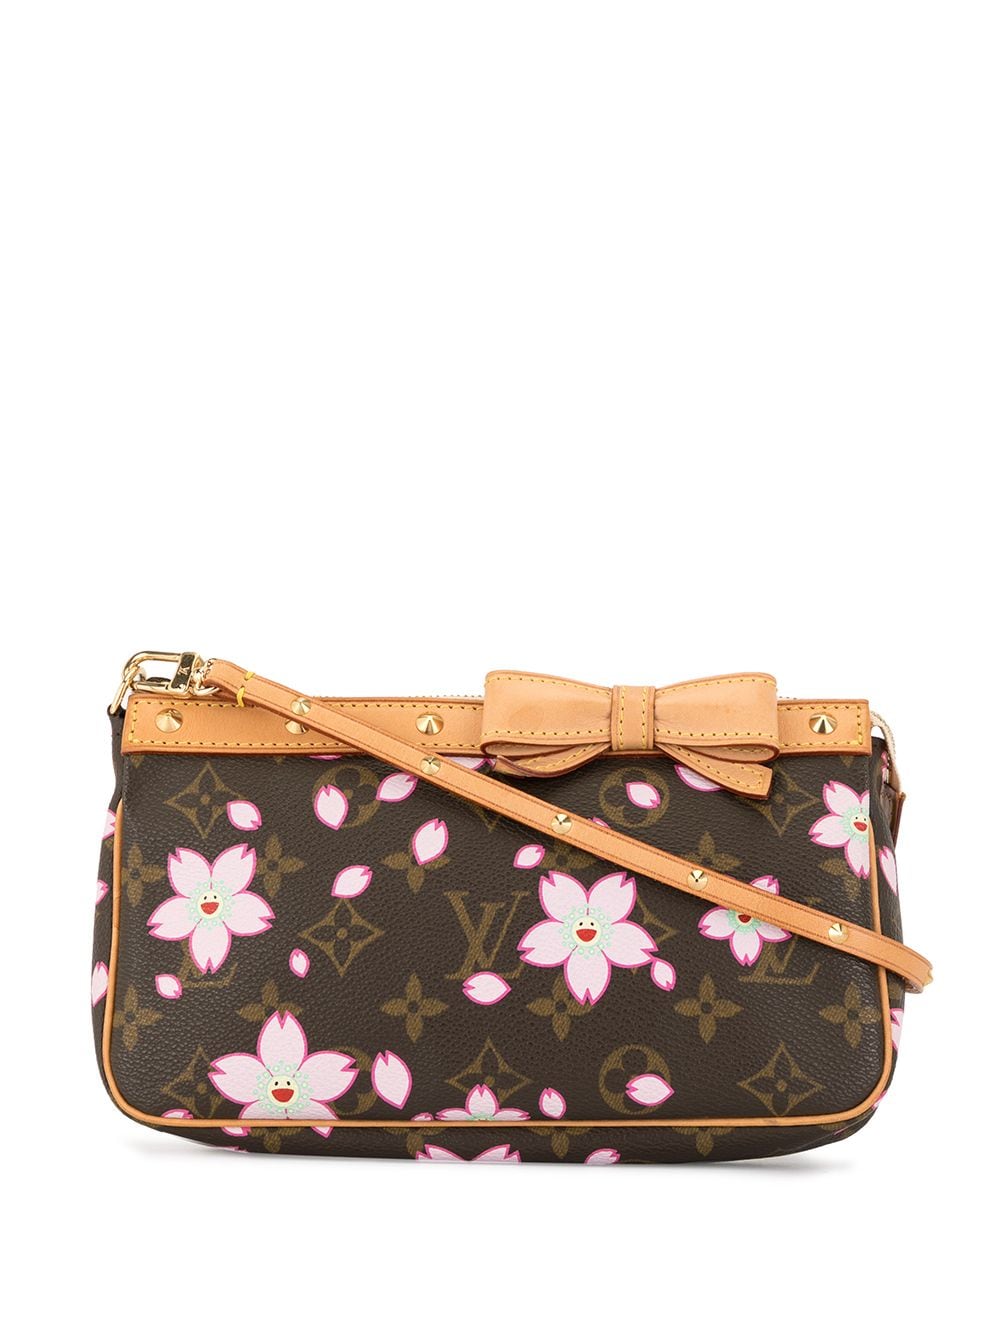 Louis Vuitton Cherry Blossom Umbrella - Farfetch